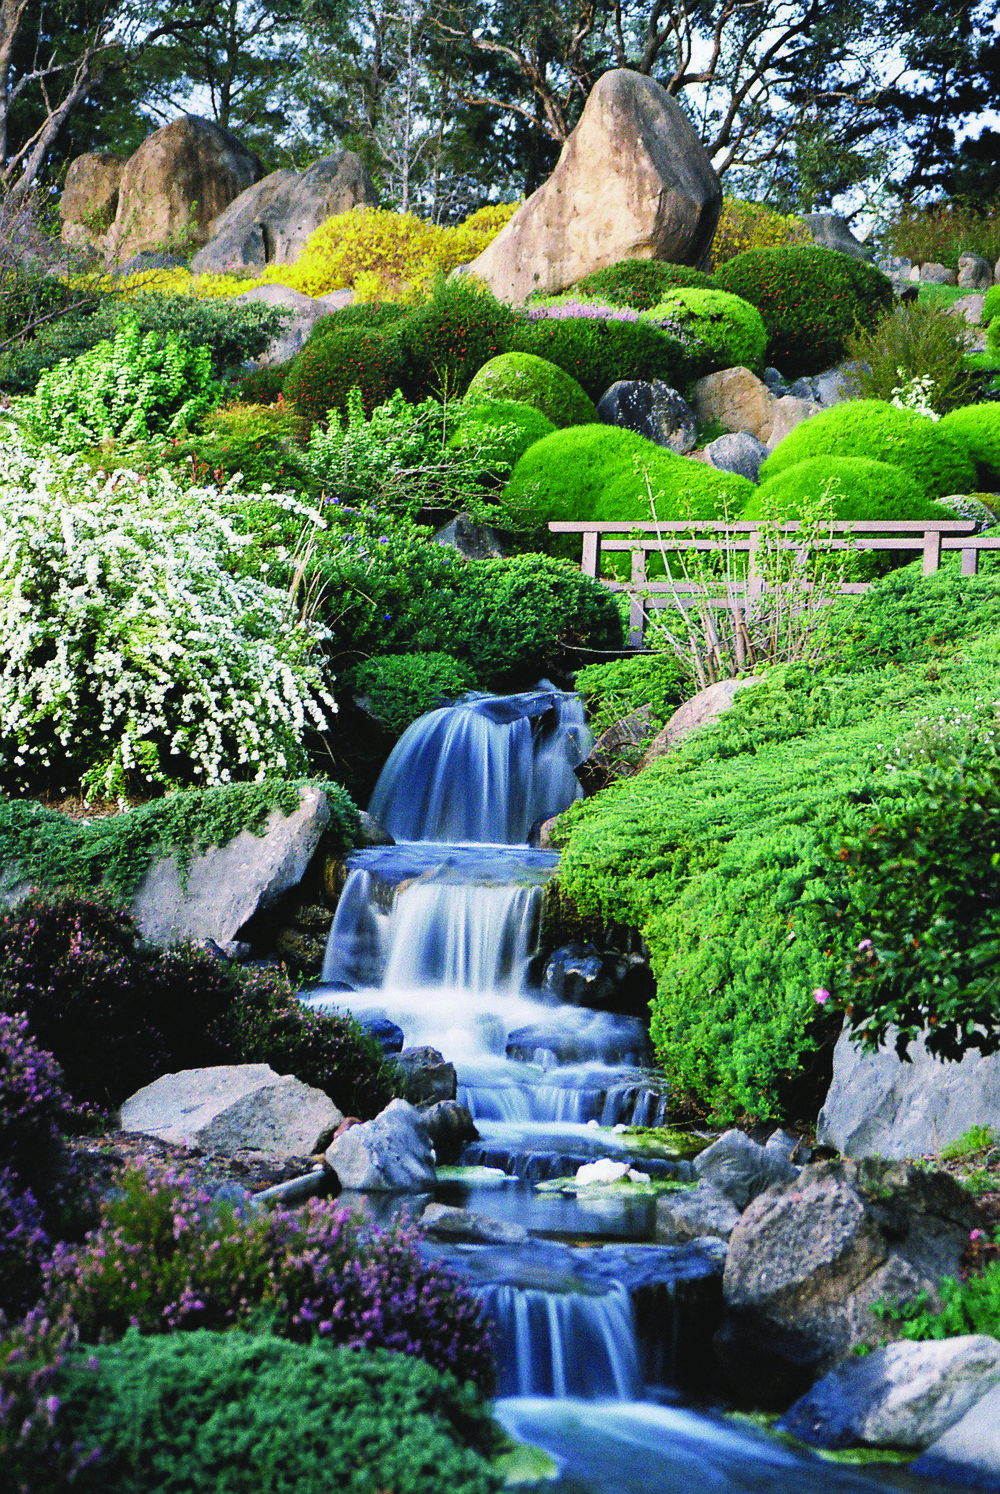 Remarkable Small Japanese Style Garden Ideas